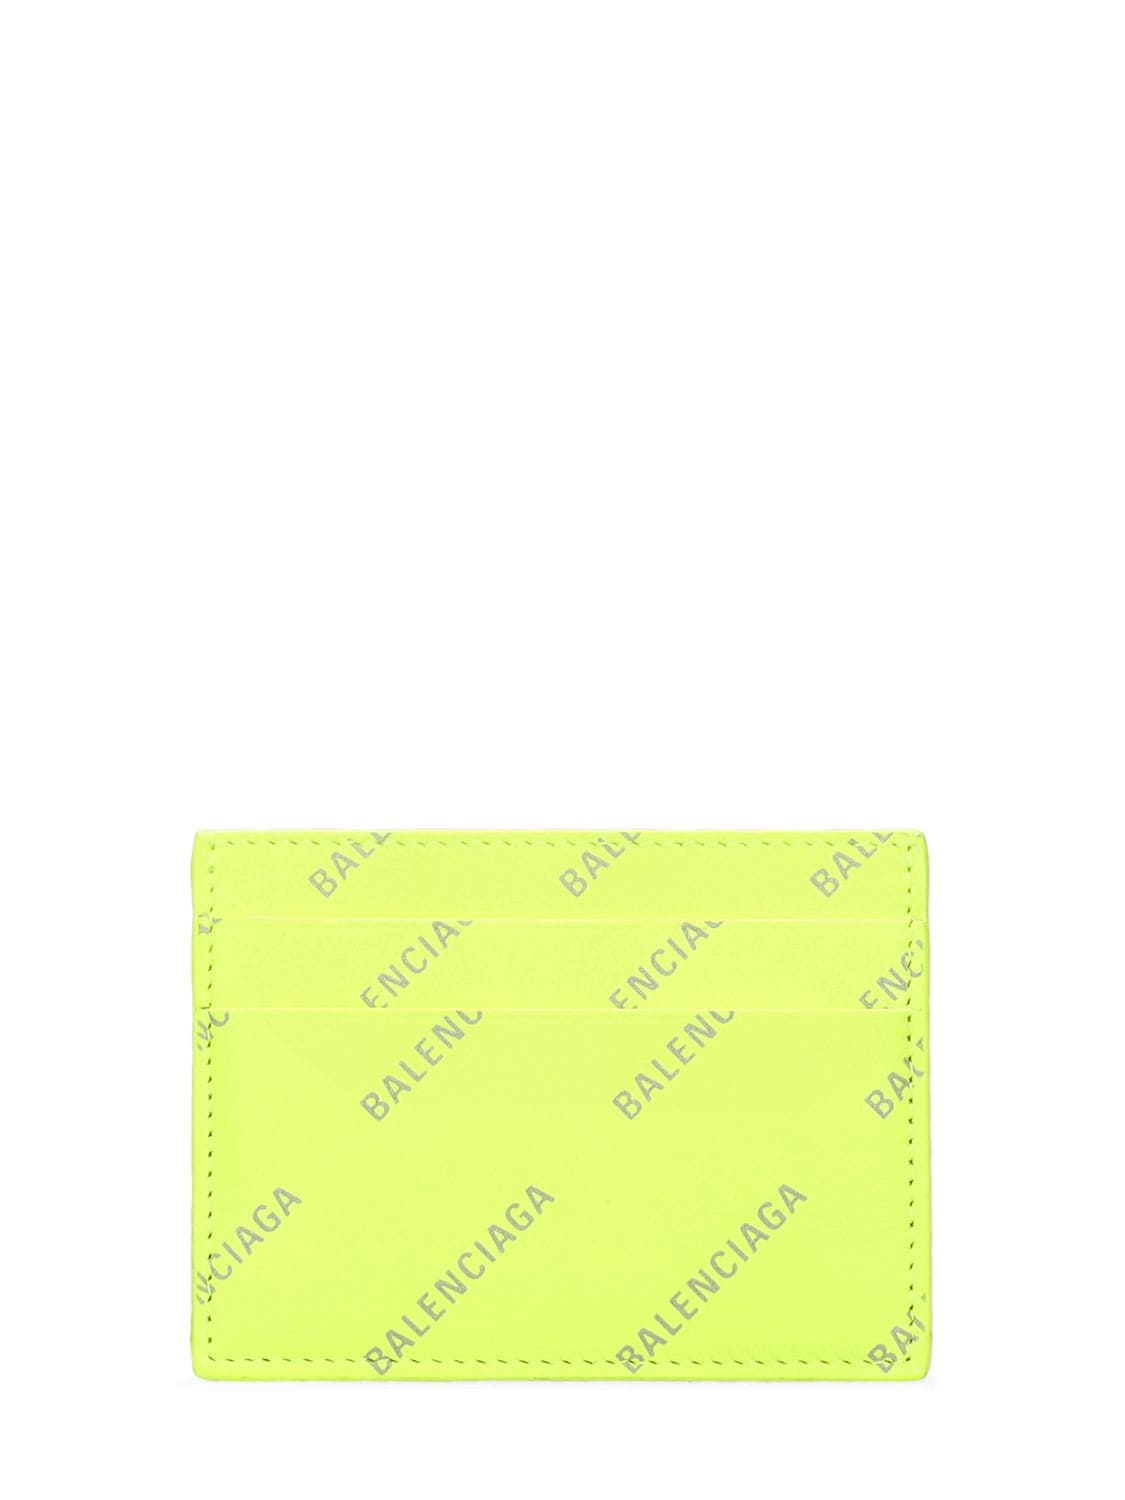 Balenciaga 皮革信用卡包 In Neon Yellow